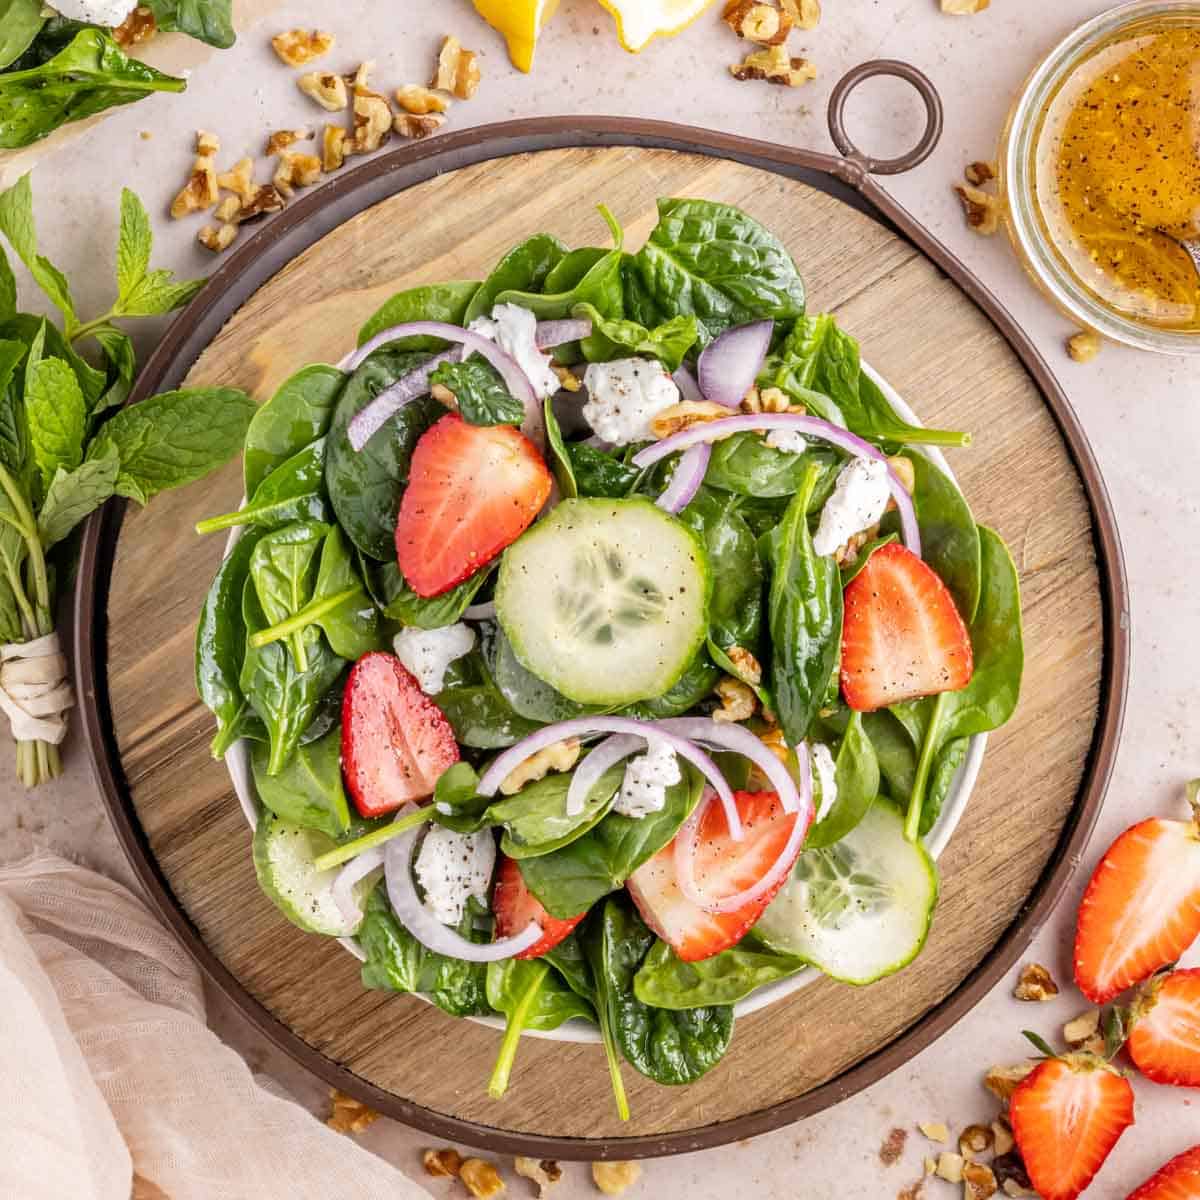 Strawberry Spinach Salad with Lemon Vinaigrette